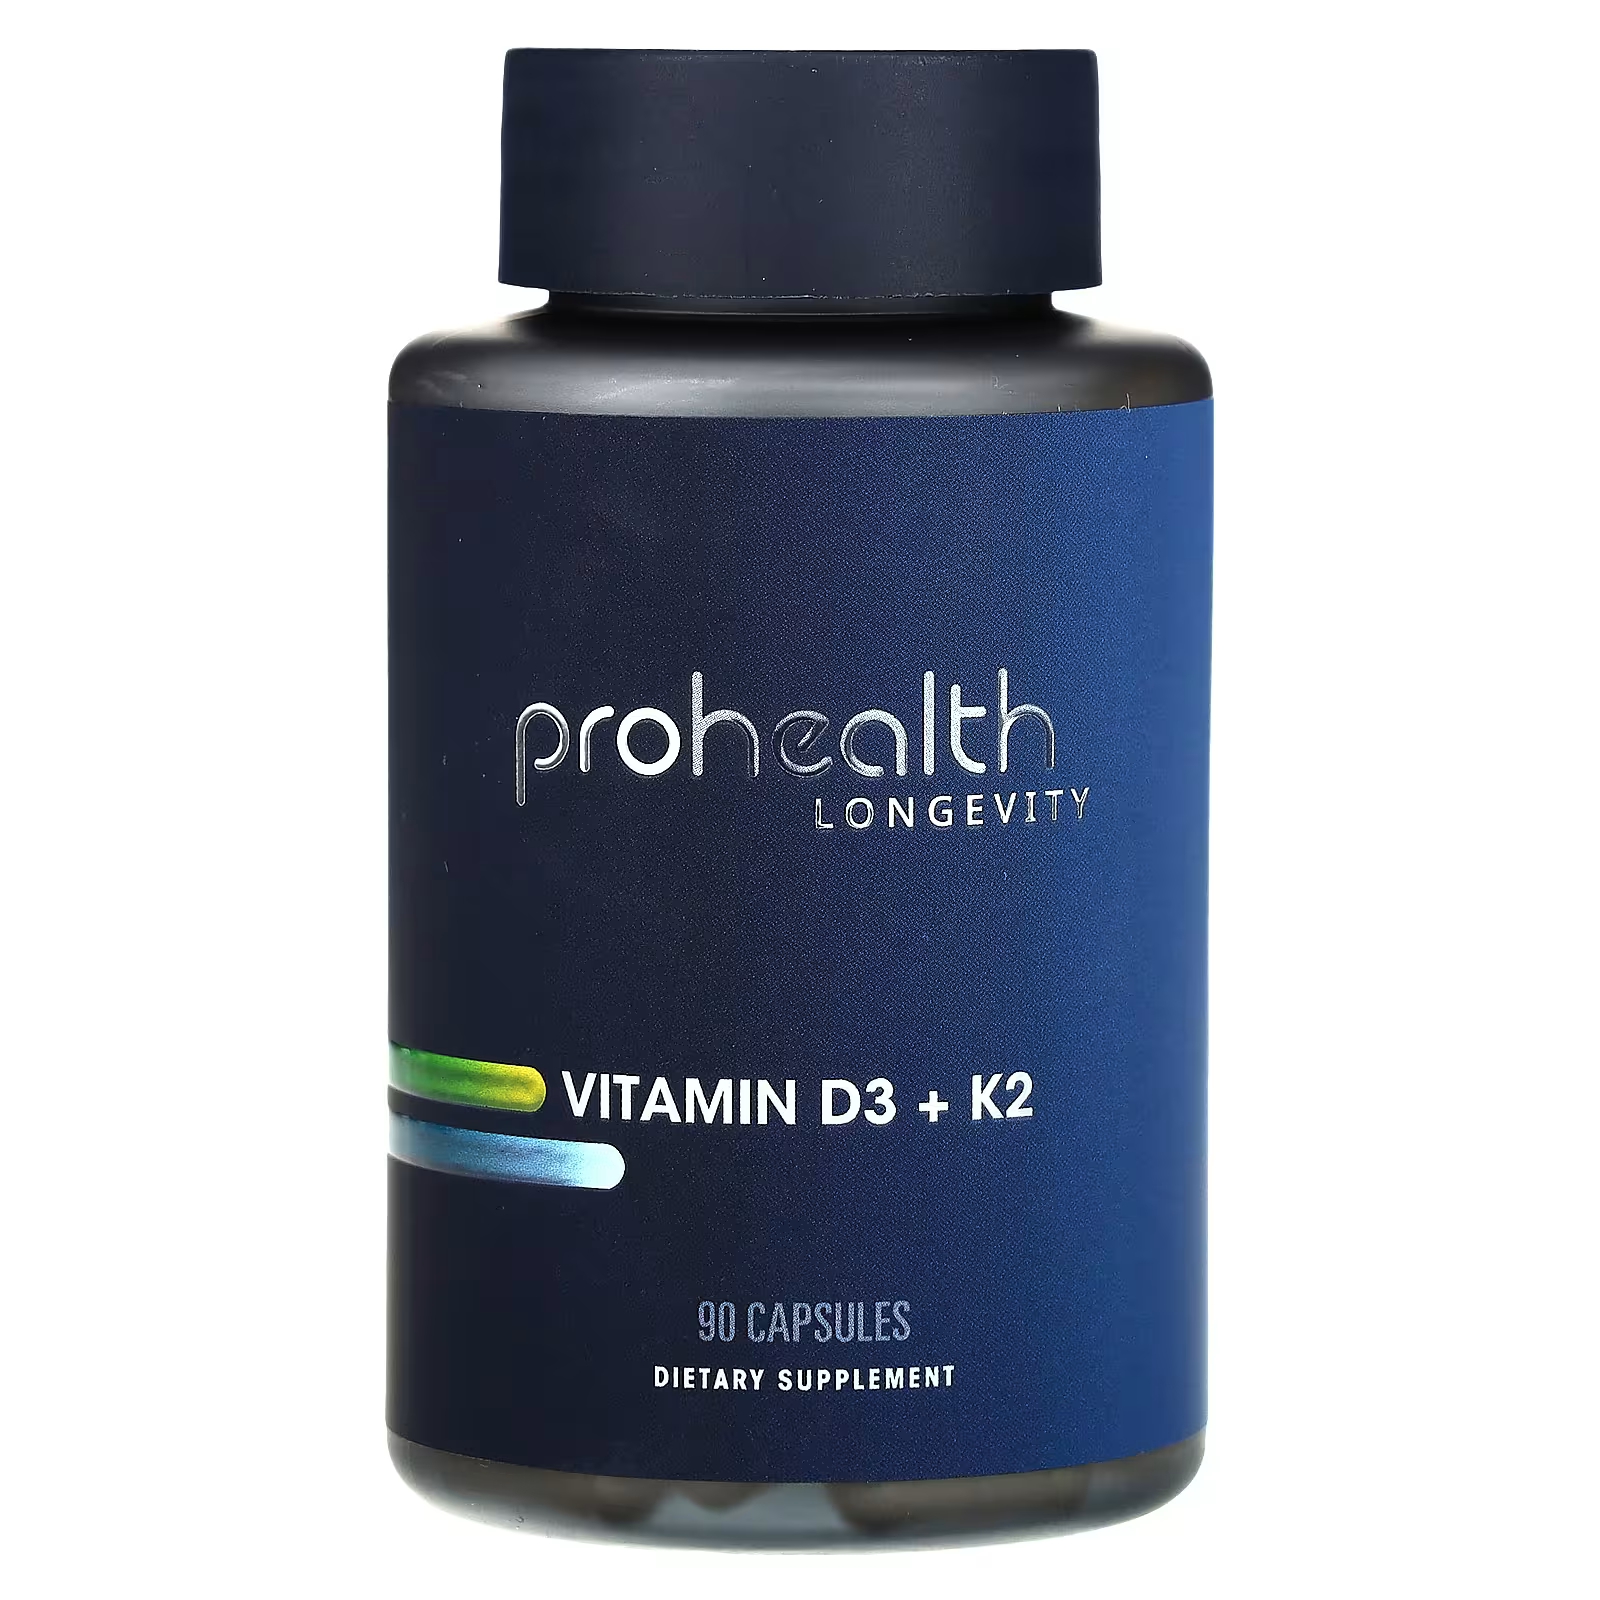 ProHealth Витамин D3 + K2 долголетия, 90 капсул ProHealth Longevity